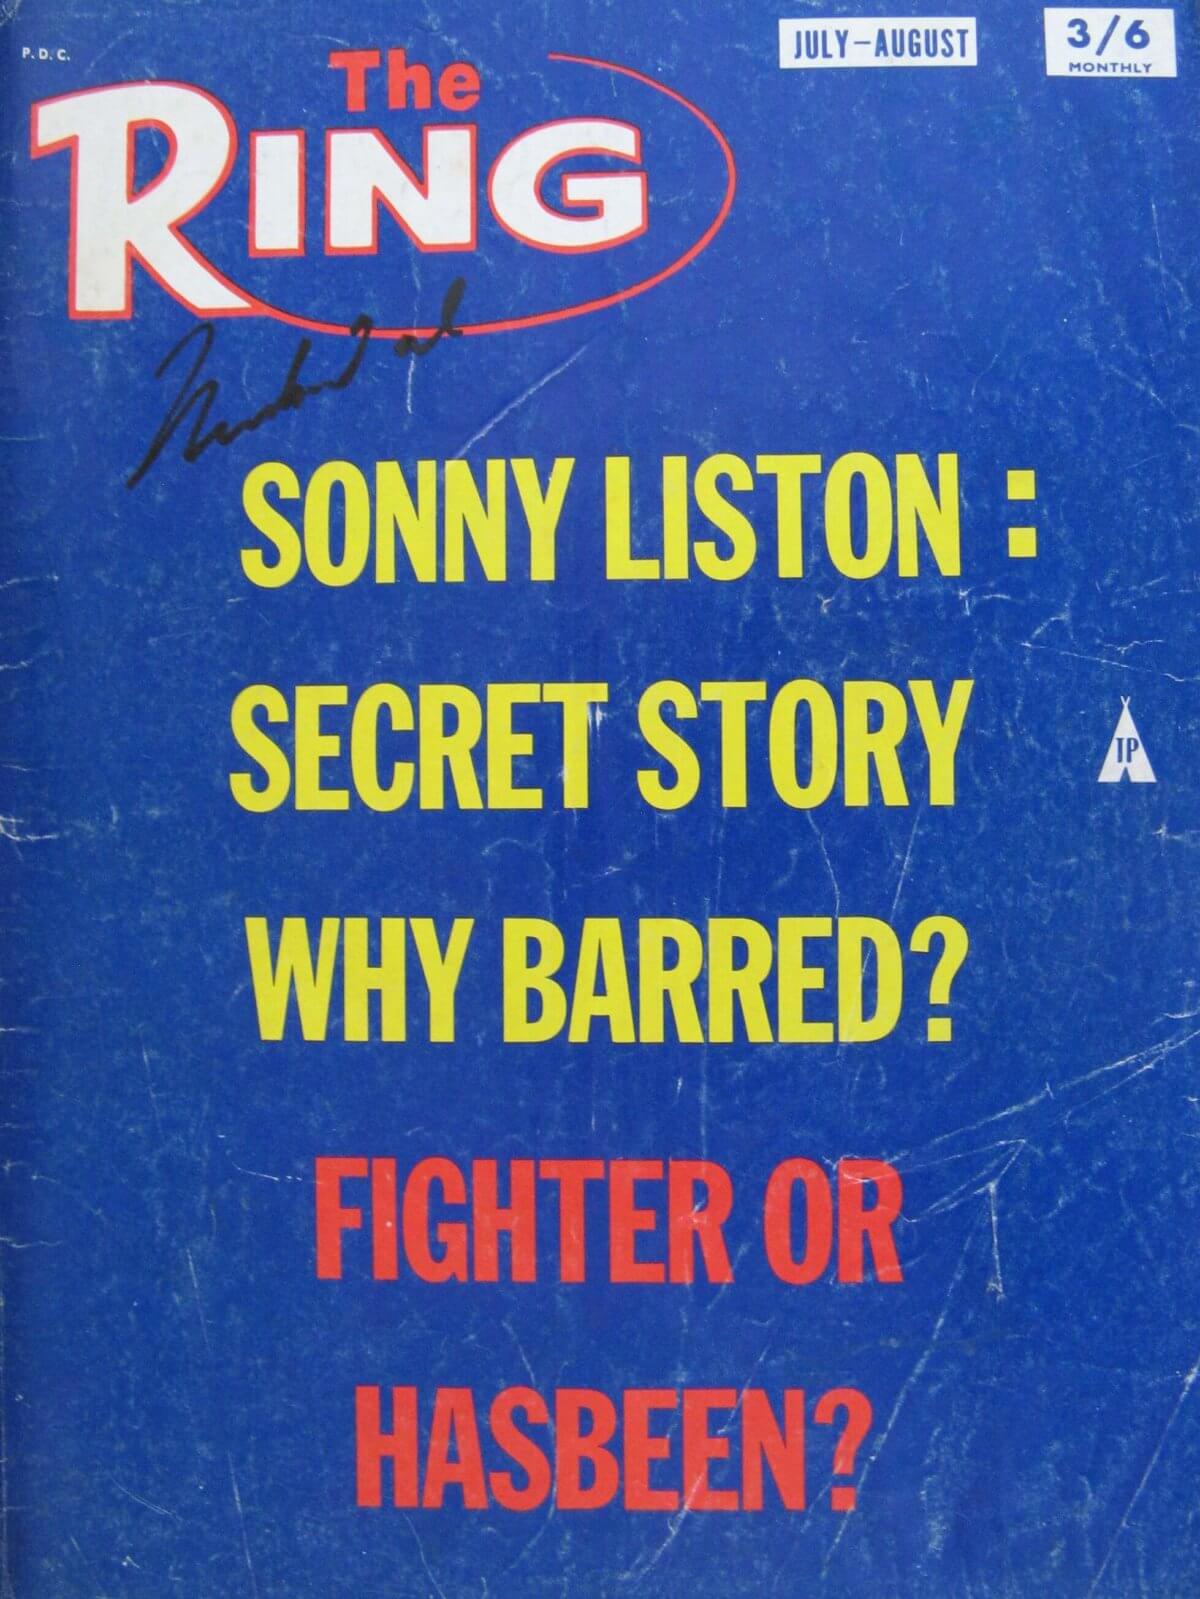 Ali Signed The Ring Magazine July 1968